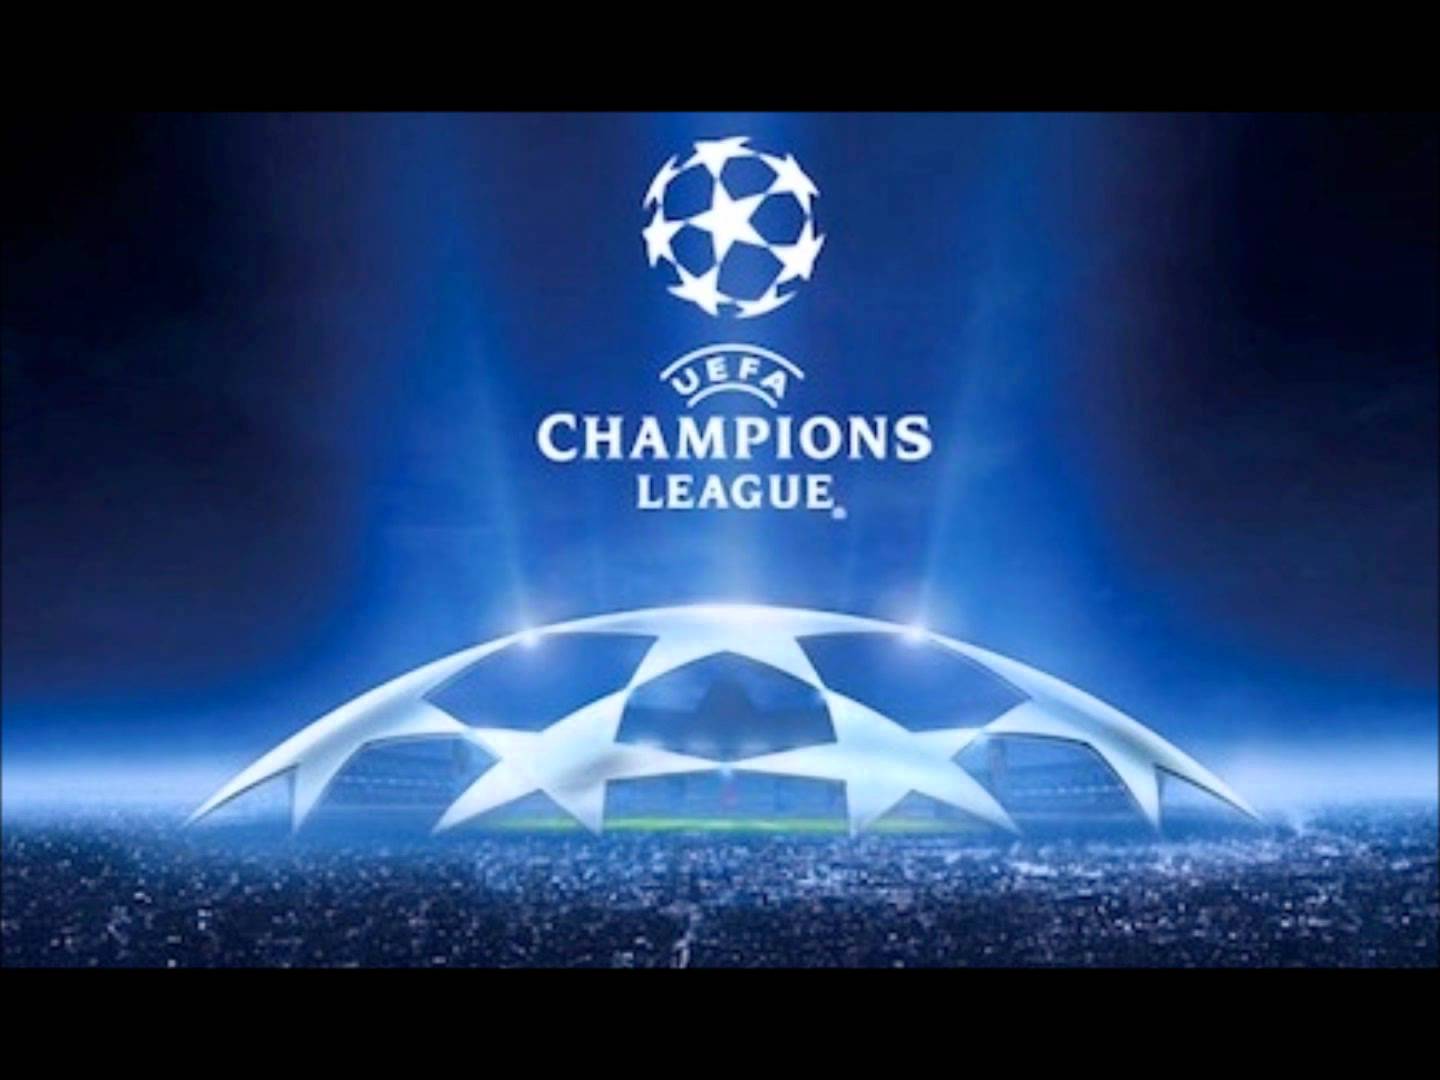 UEFA Champions League wallpaper, Sports, HQ UEFA Champions League pictureK Wallpaper 2019